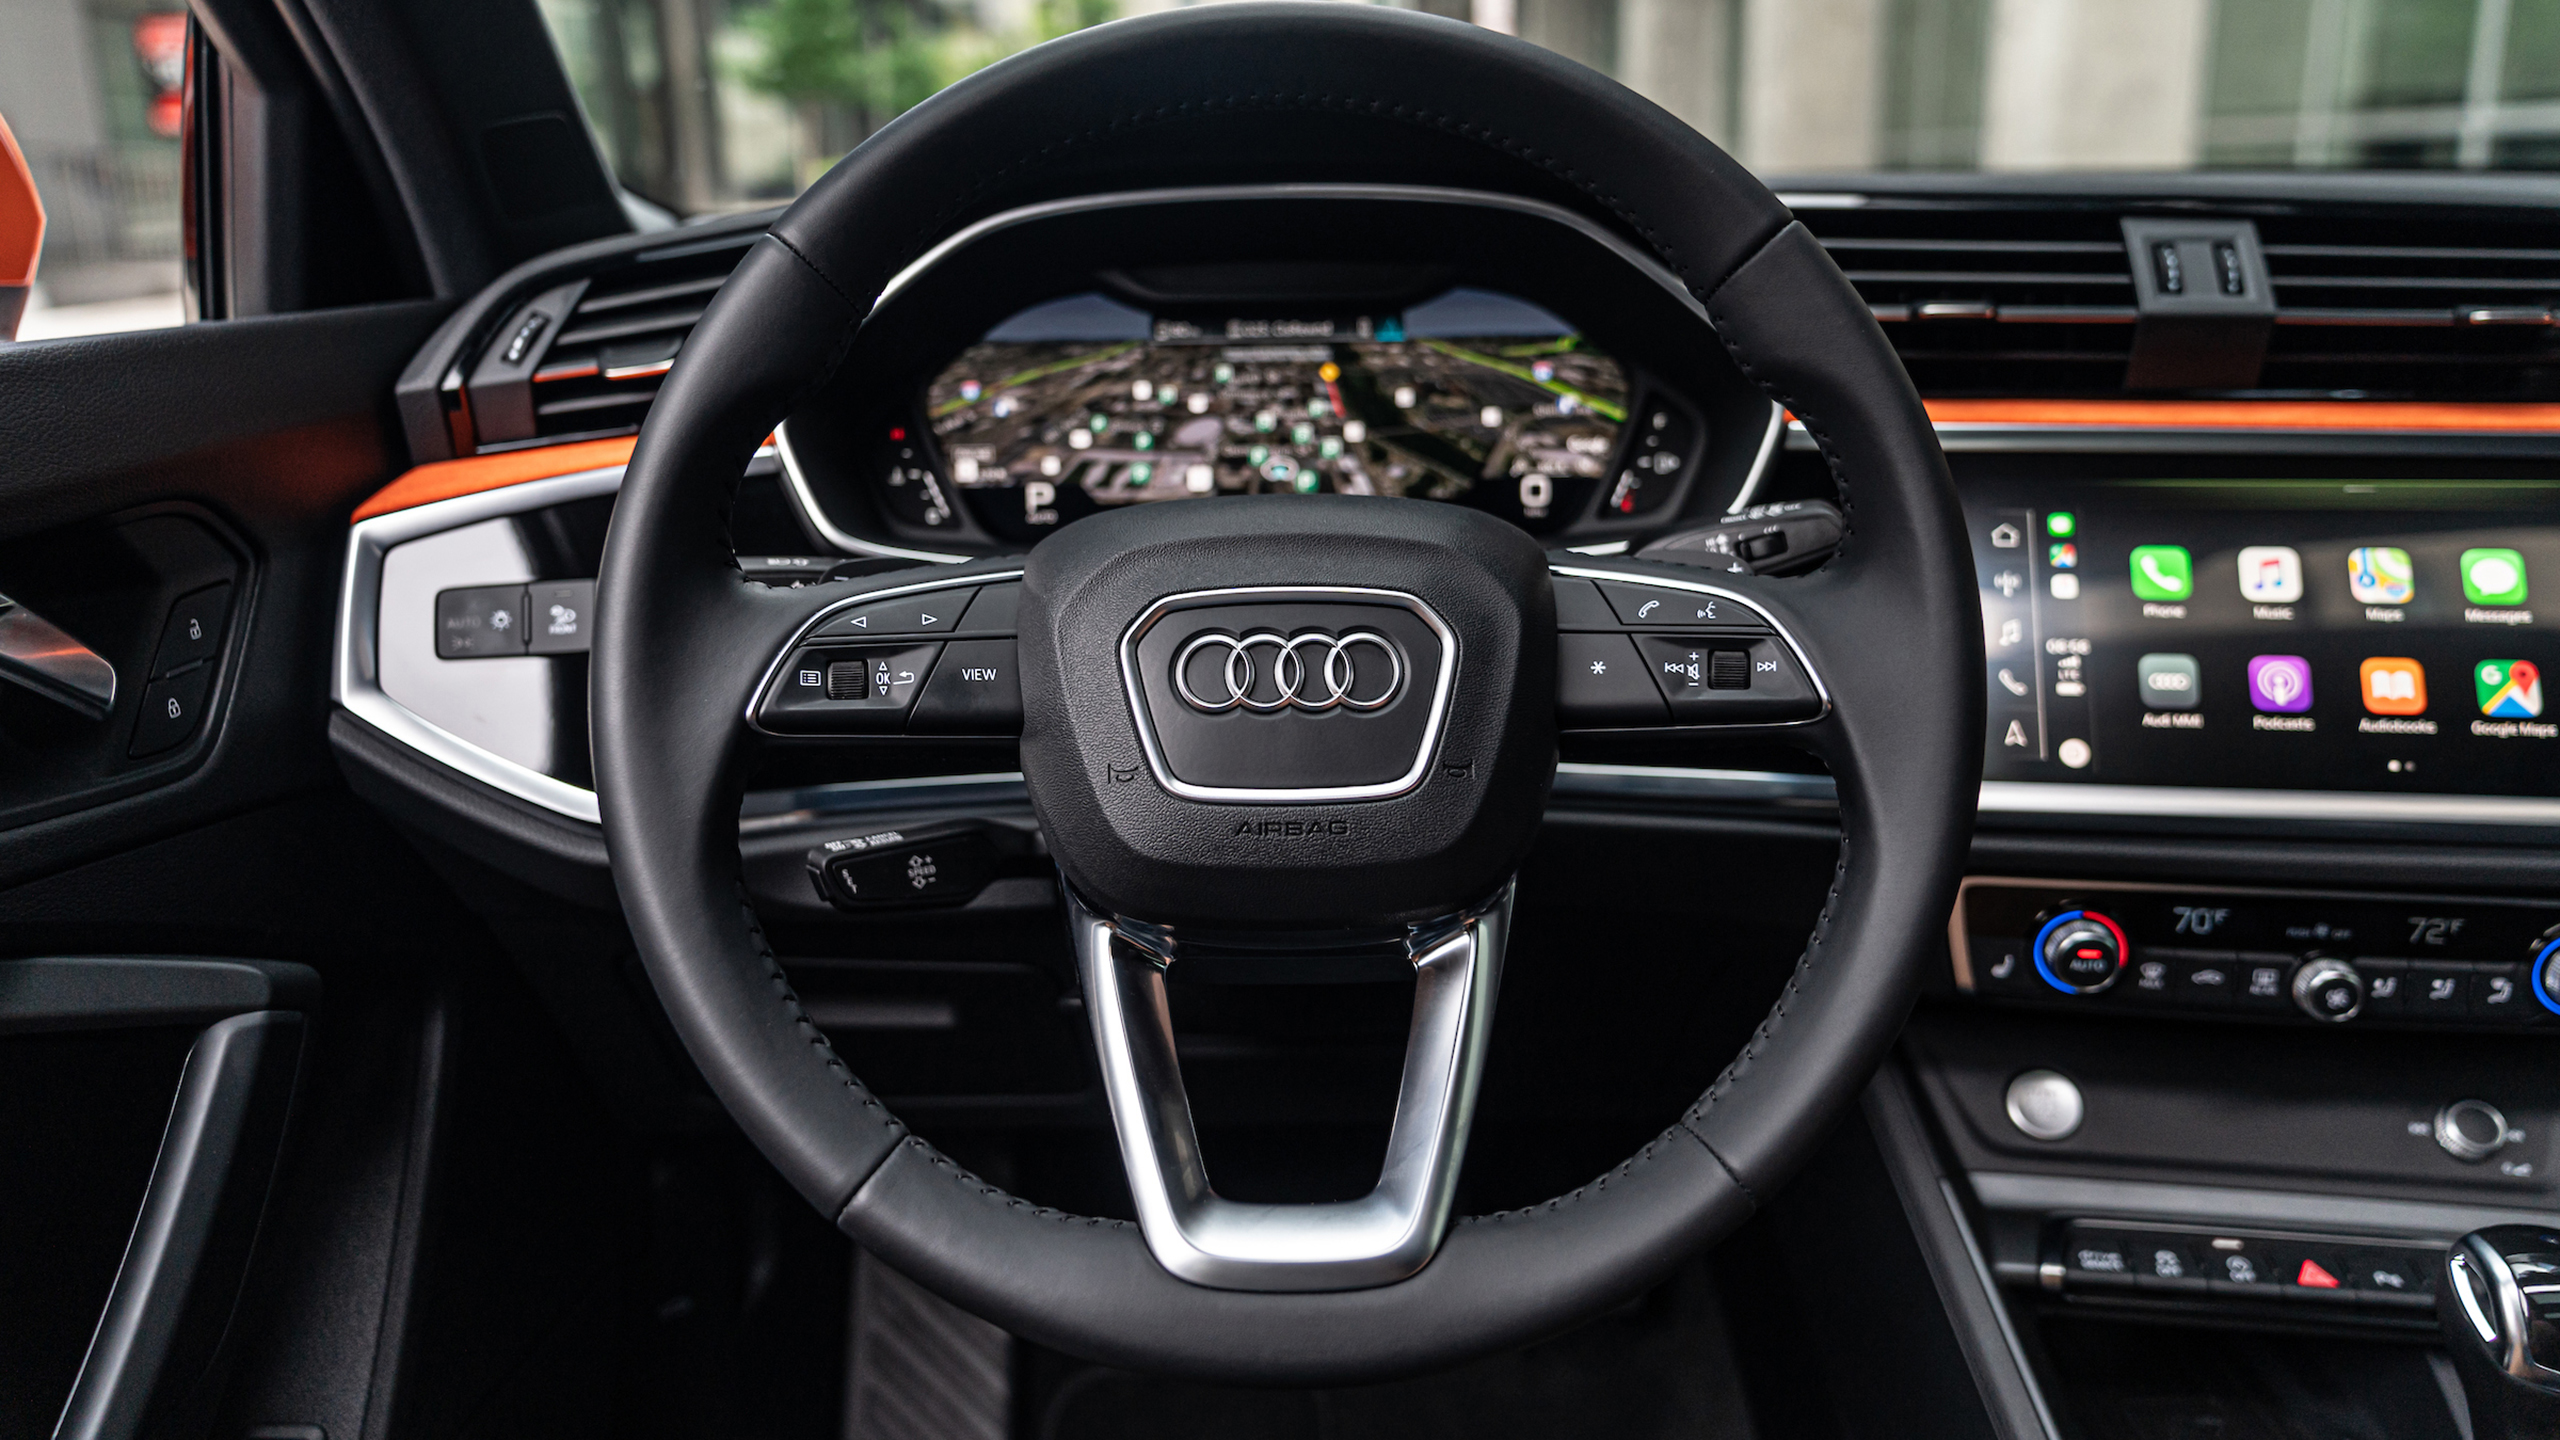 Audi Q3 2019  pictures information  specs